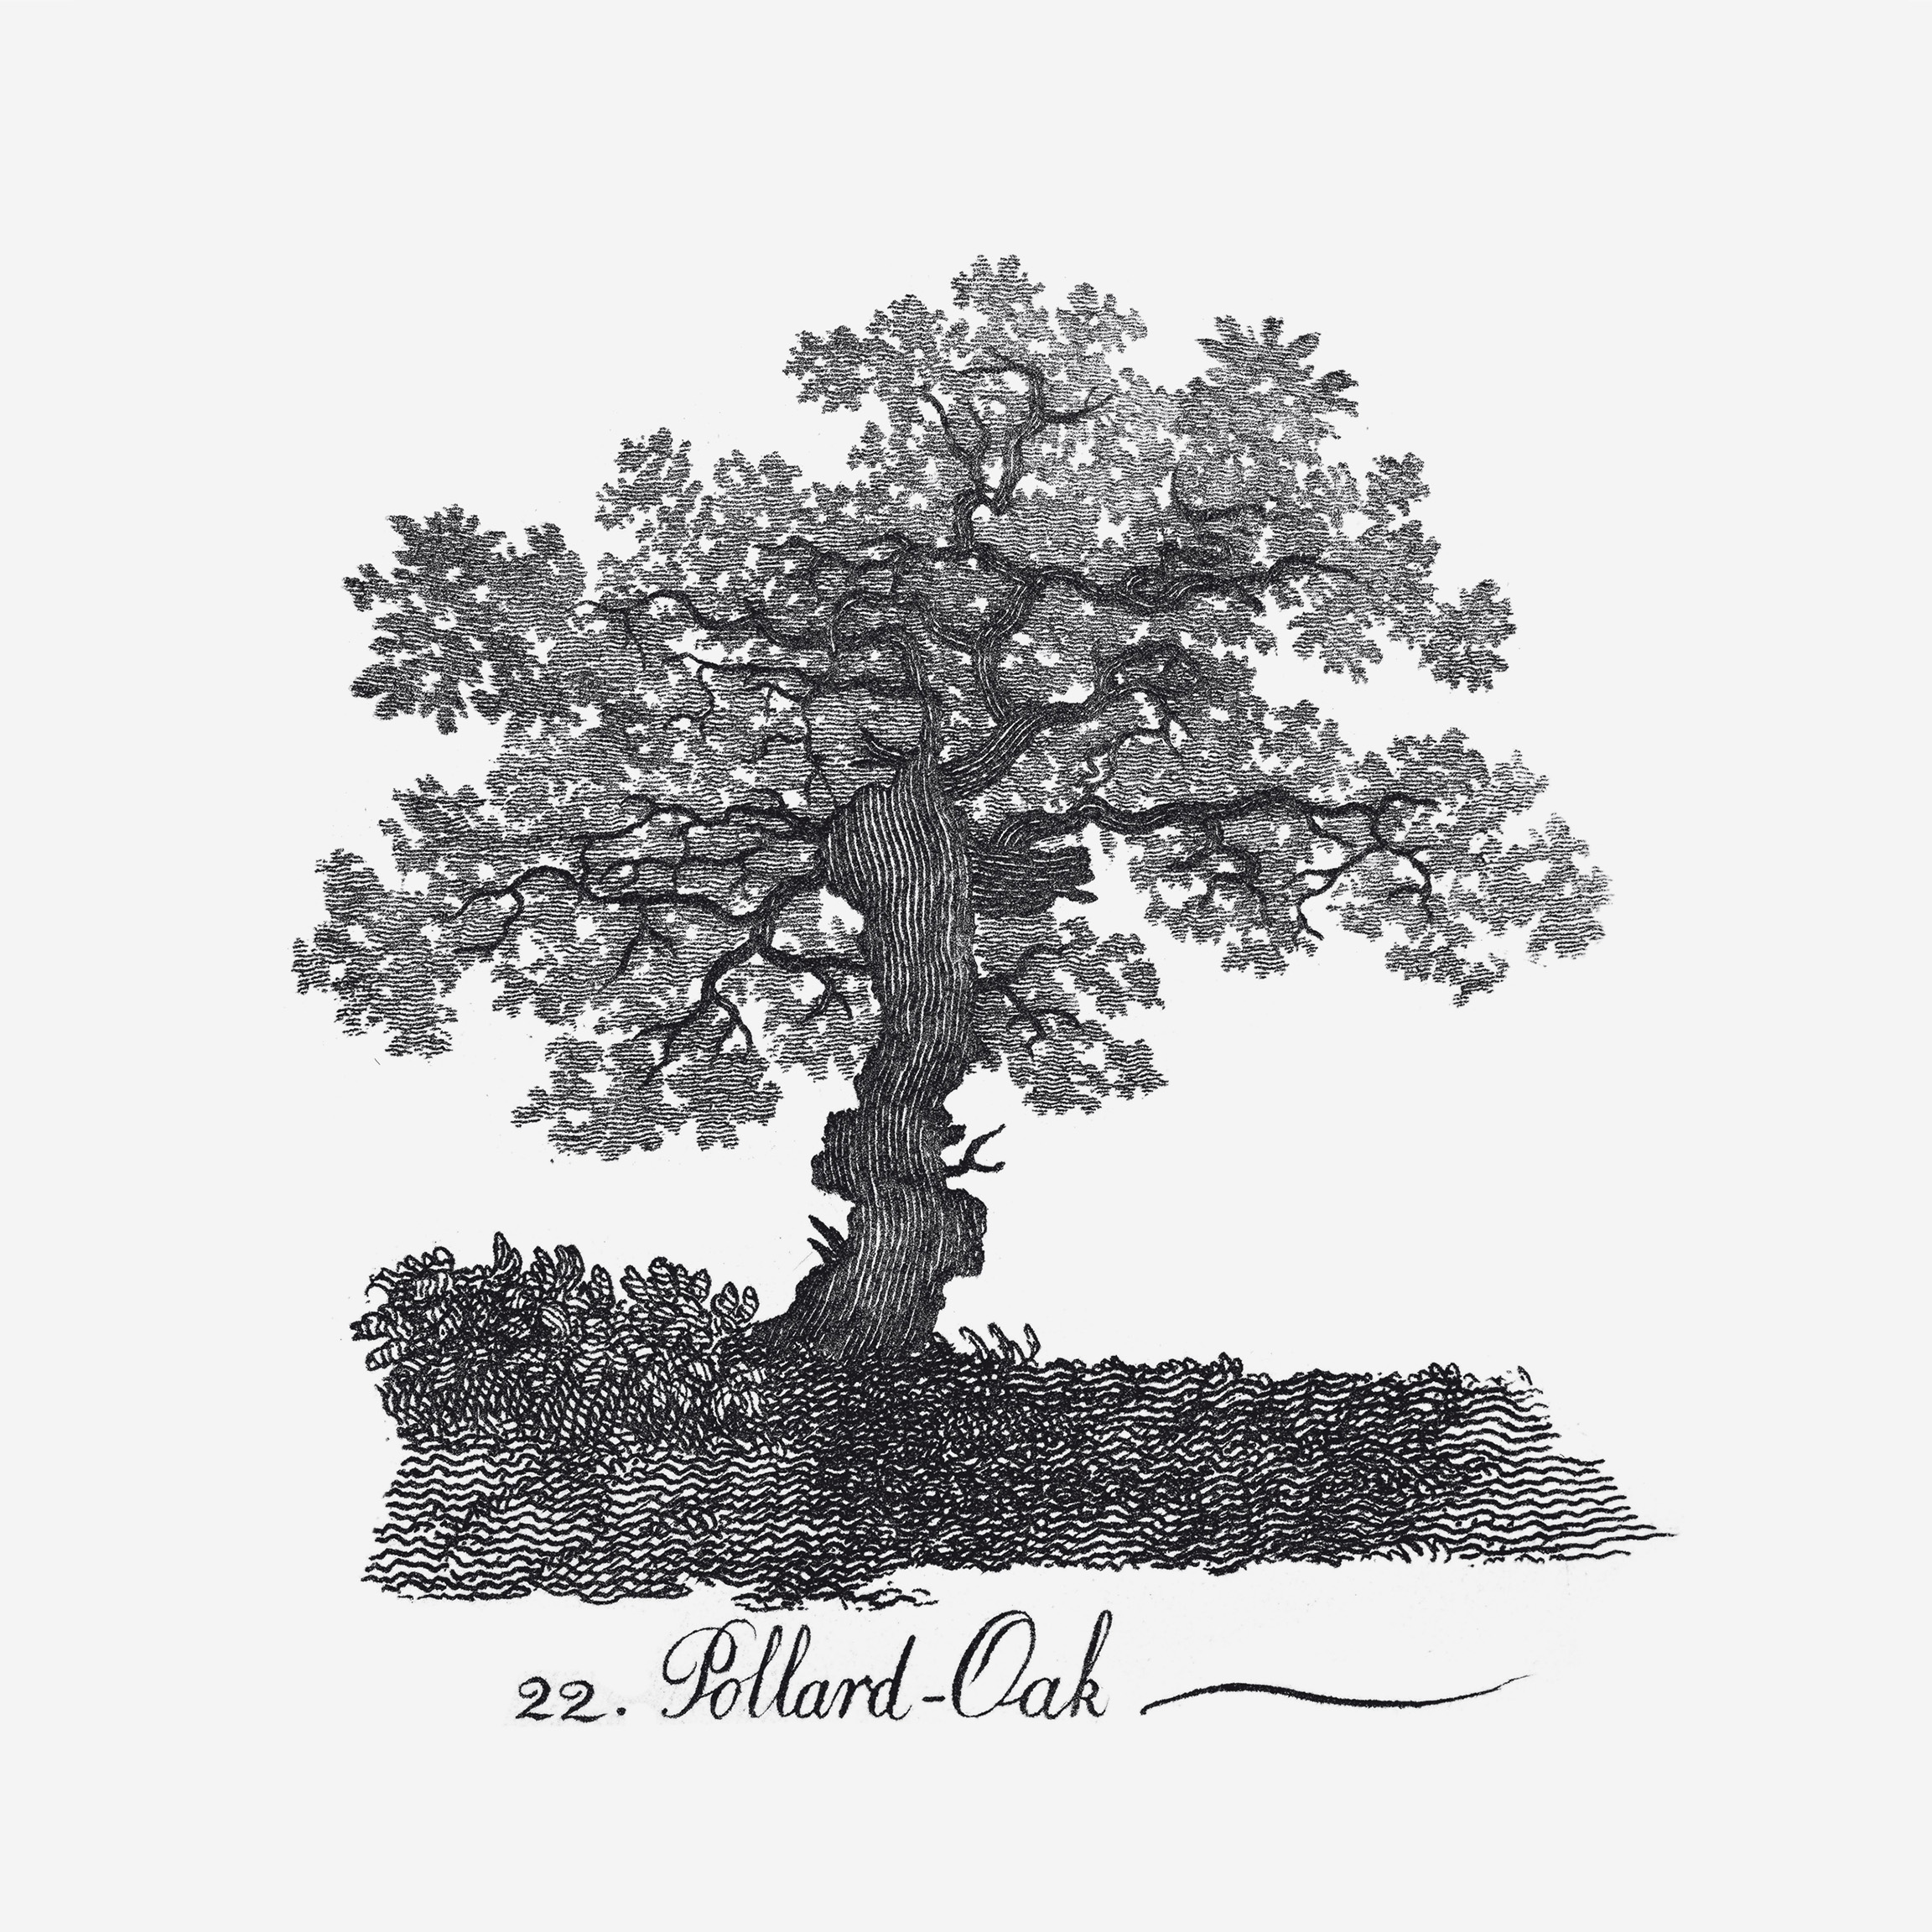 Pollard Oak